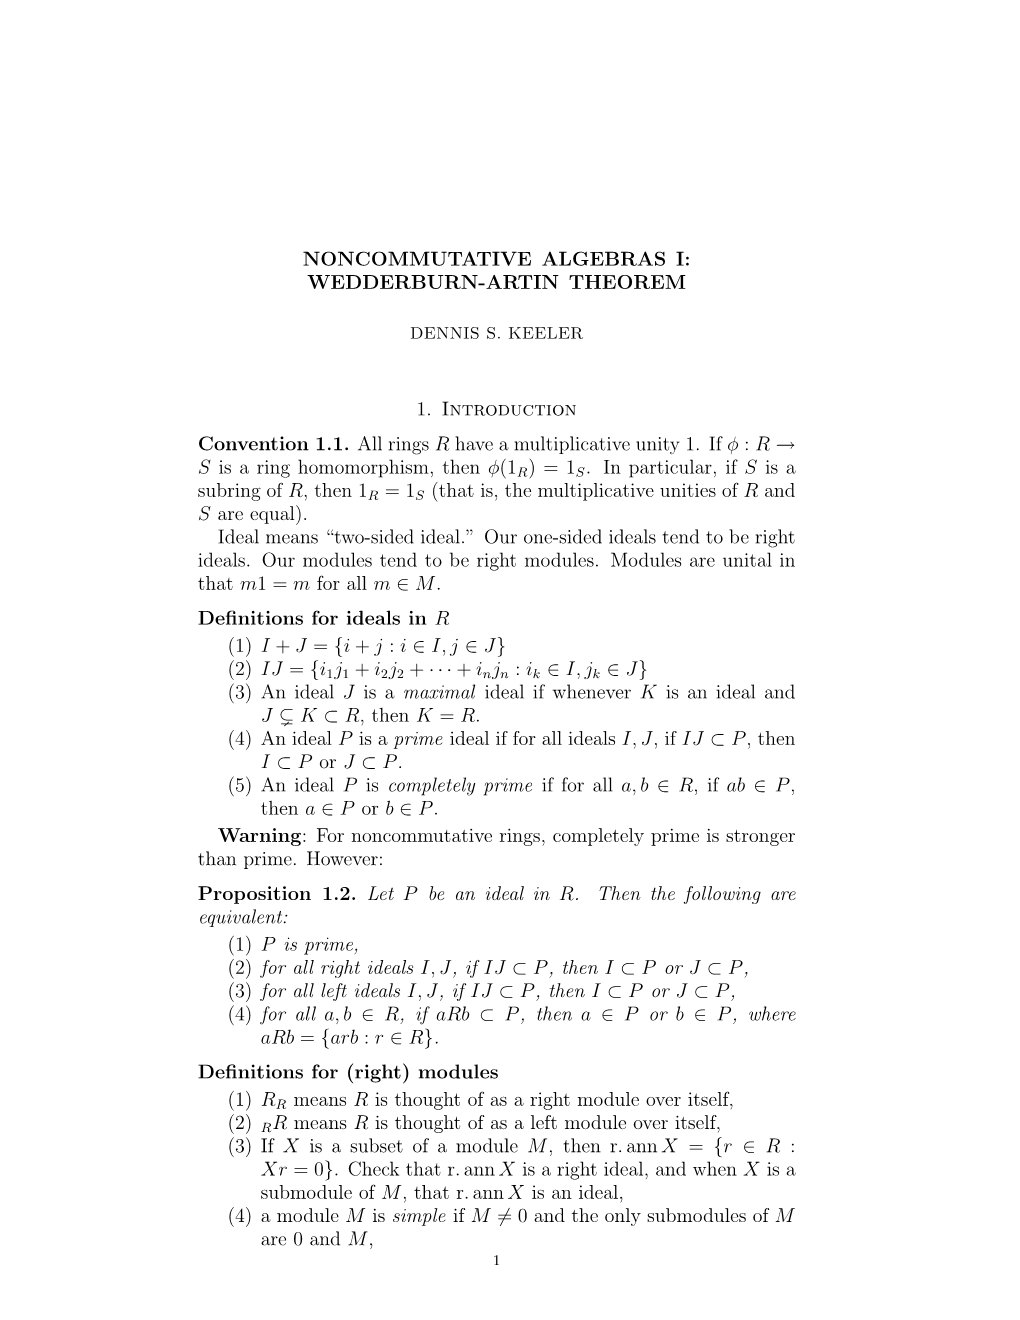 Noncommutative Algebras I: Wedderburn-Artin Theorem